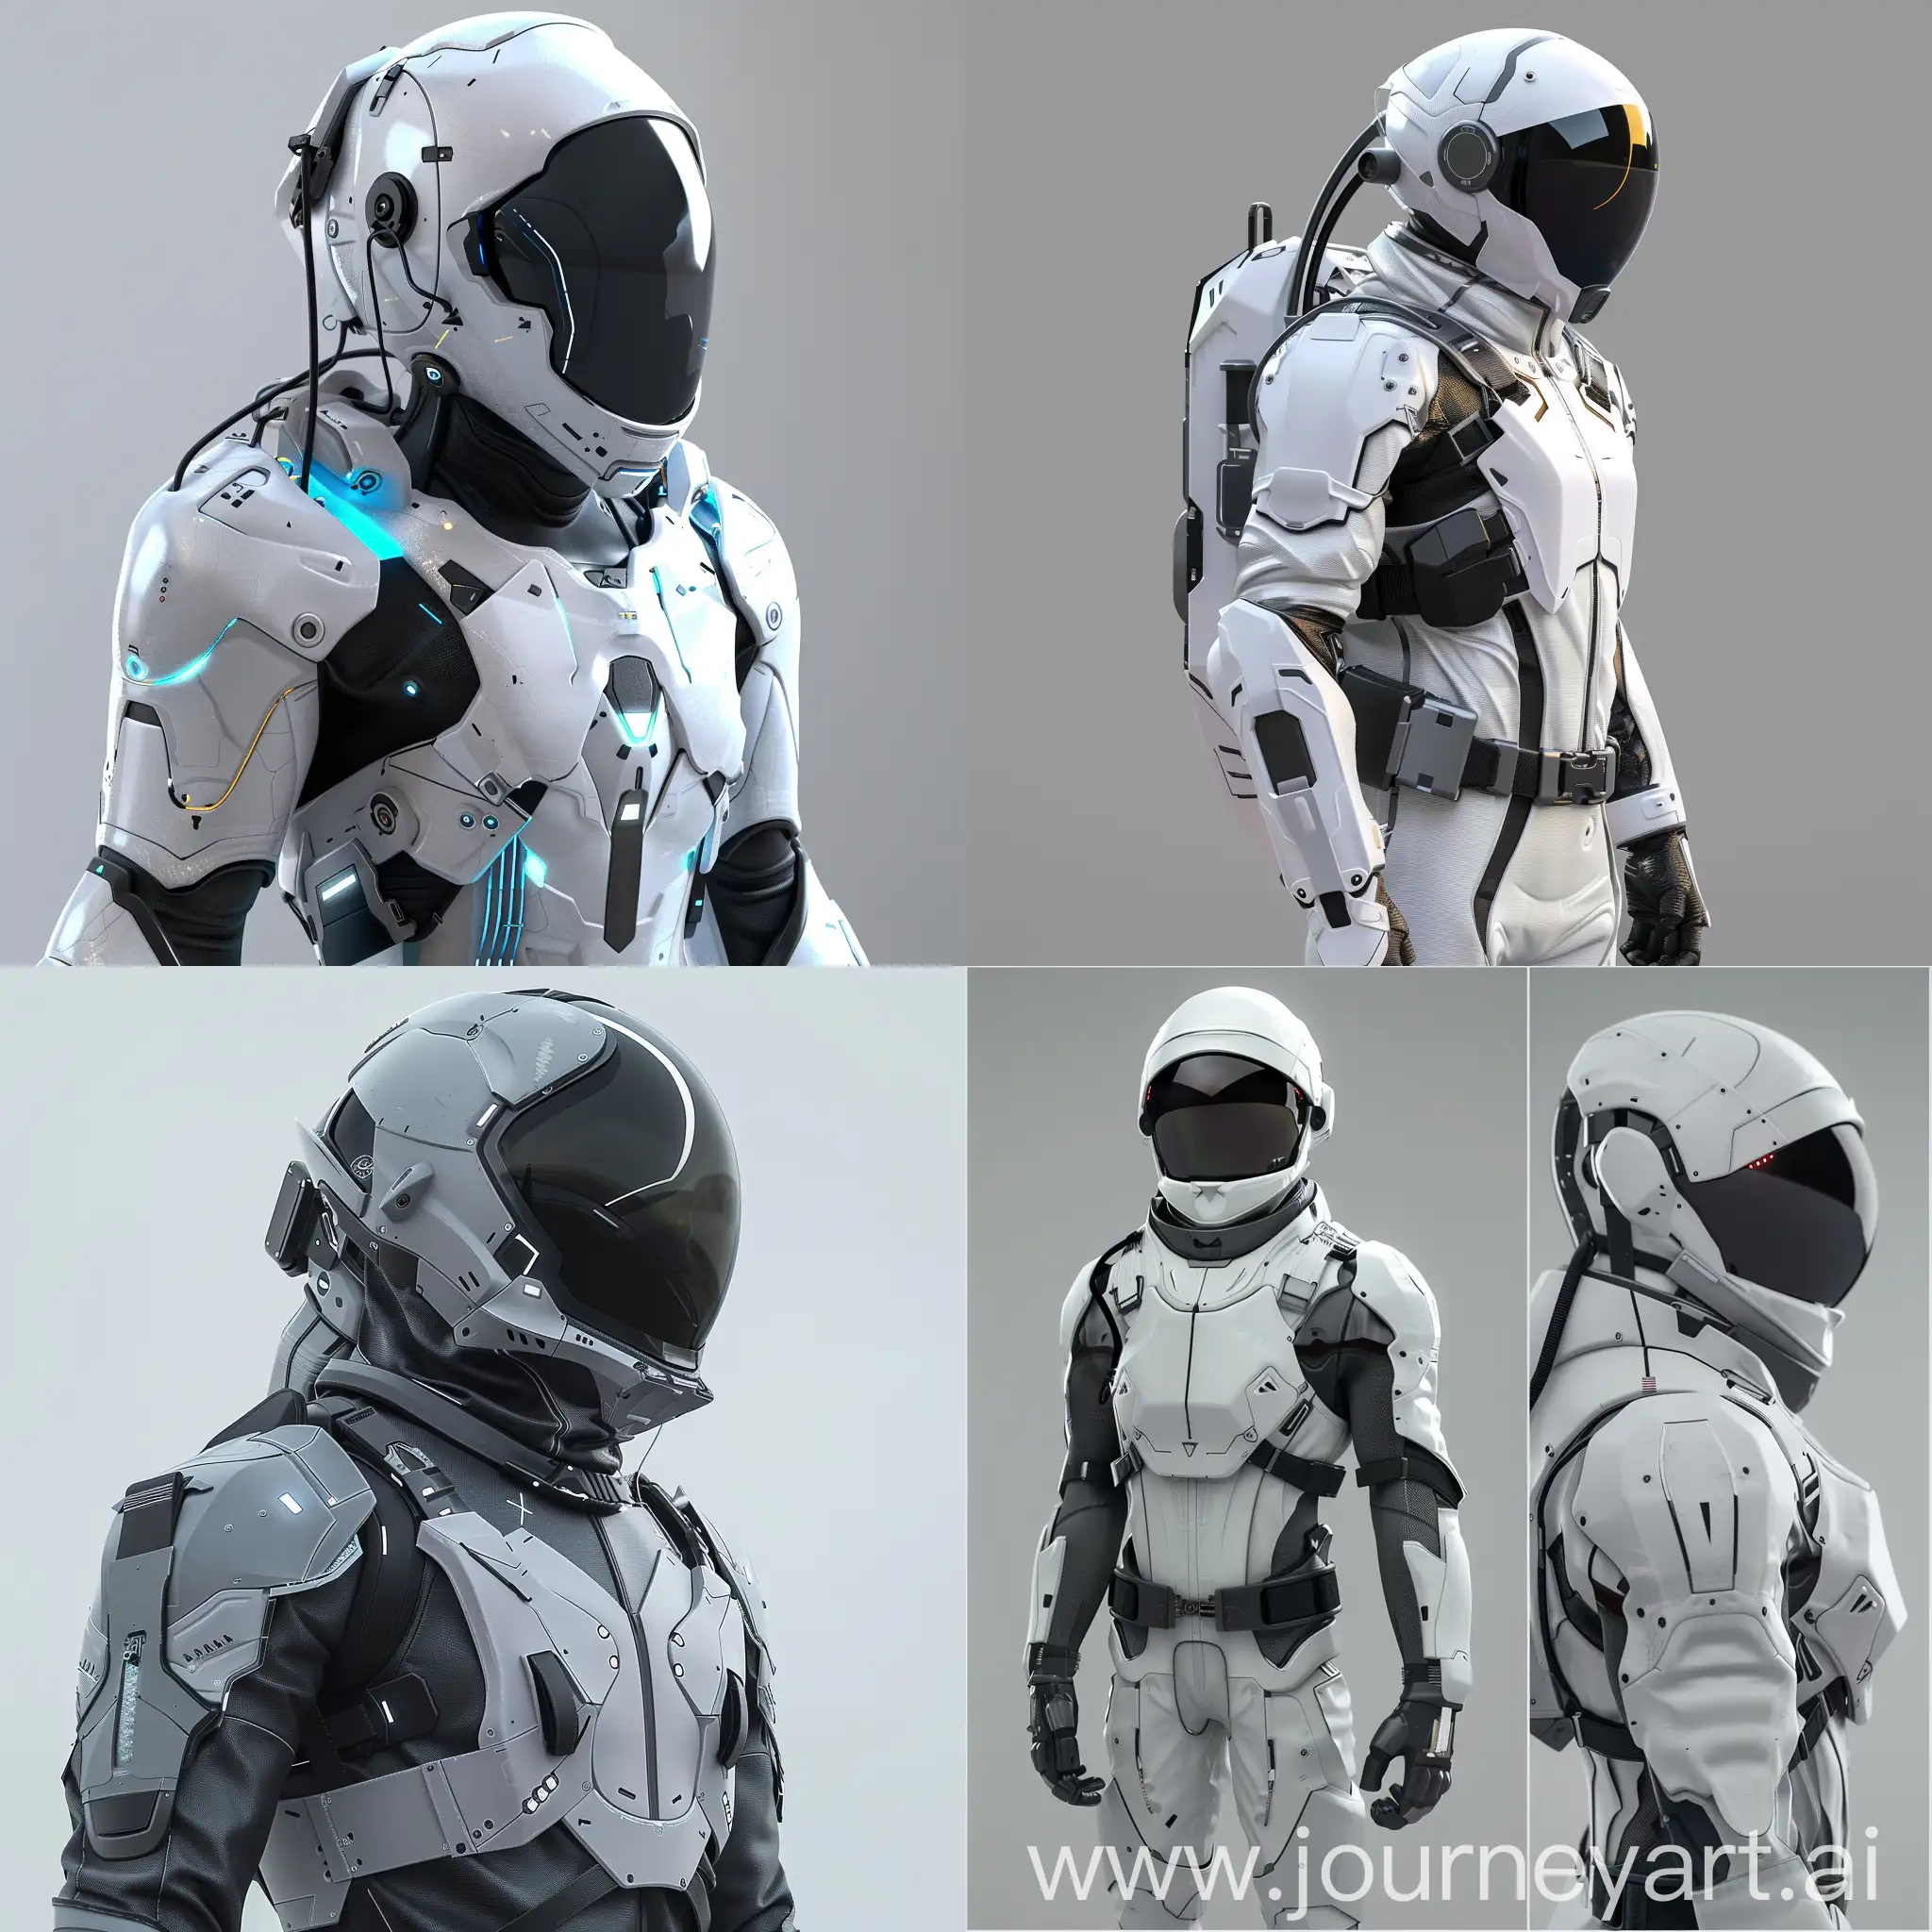 Futuristic-Space-Suit-with-SelfHealing-Nanobody-and-AR-Visor